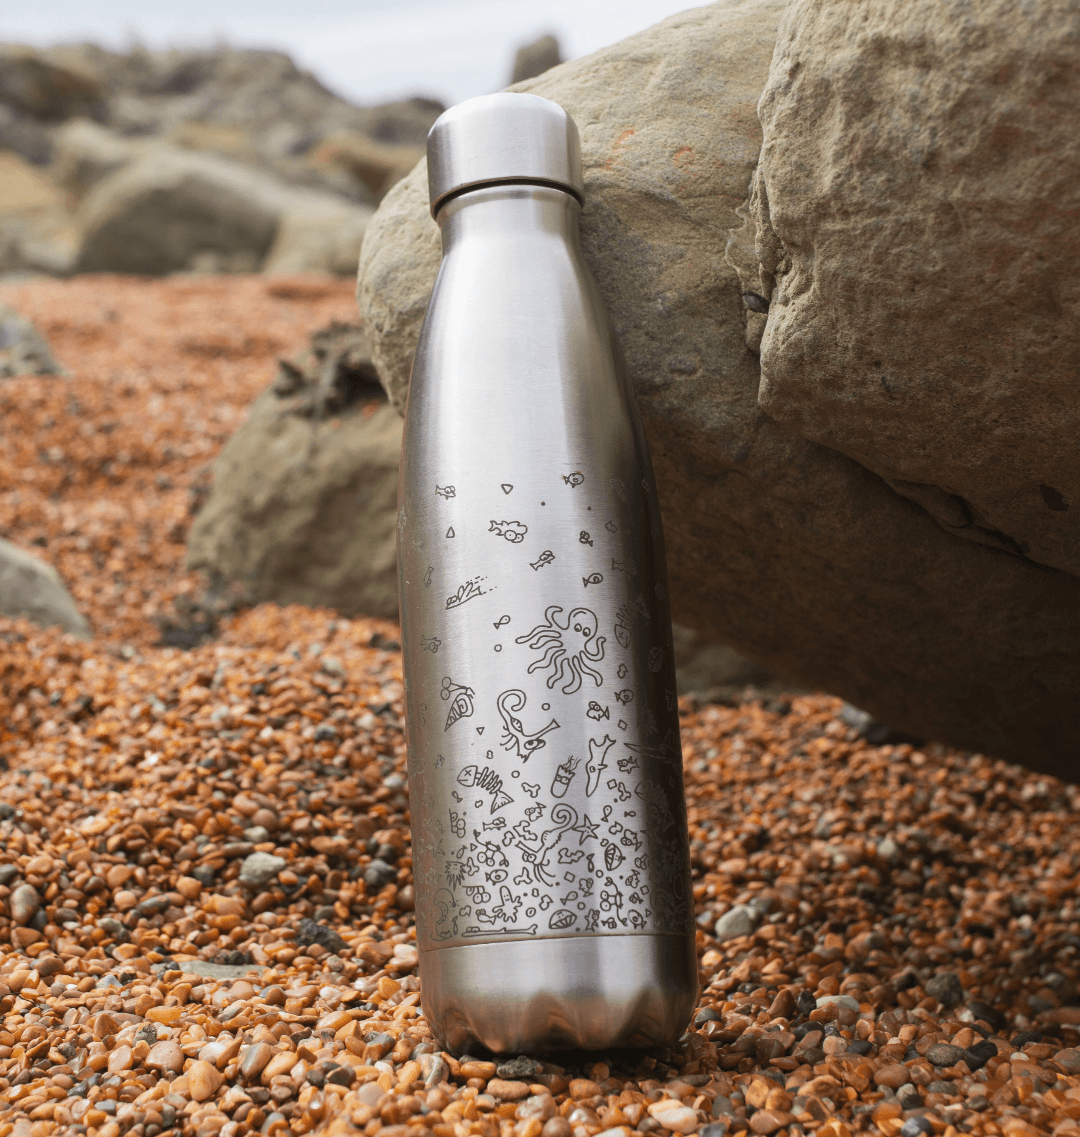 Reusable Marine Water Bottle - Accessories